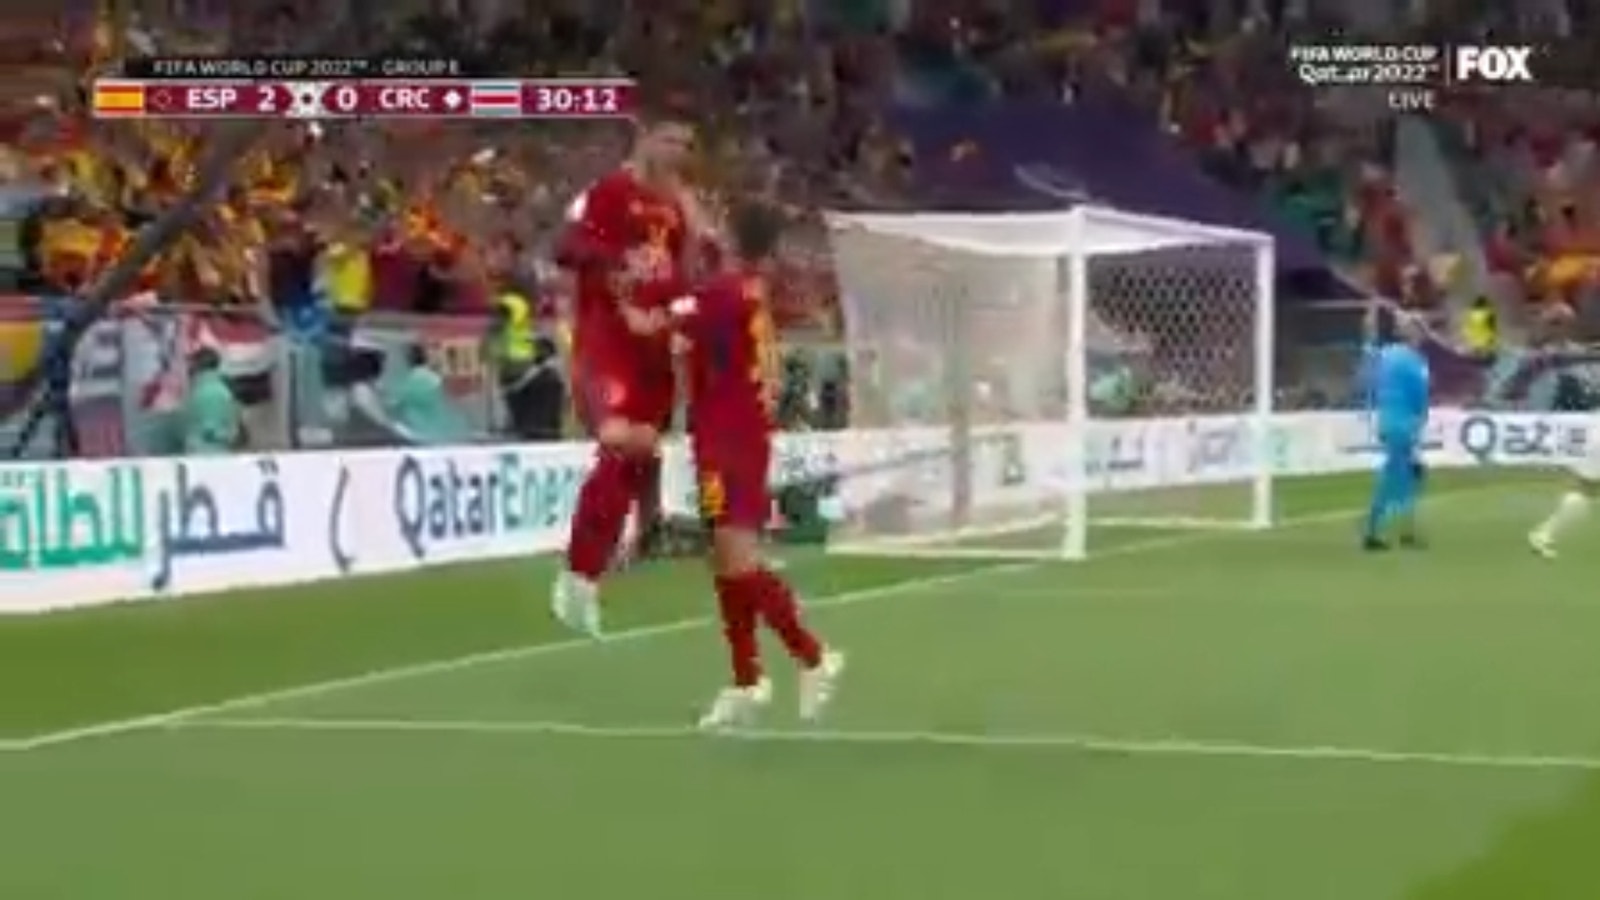 Spain's Ferran Torres scores against Costa Rica in the 31st minute.